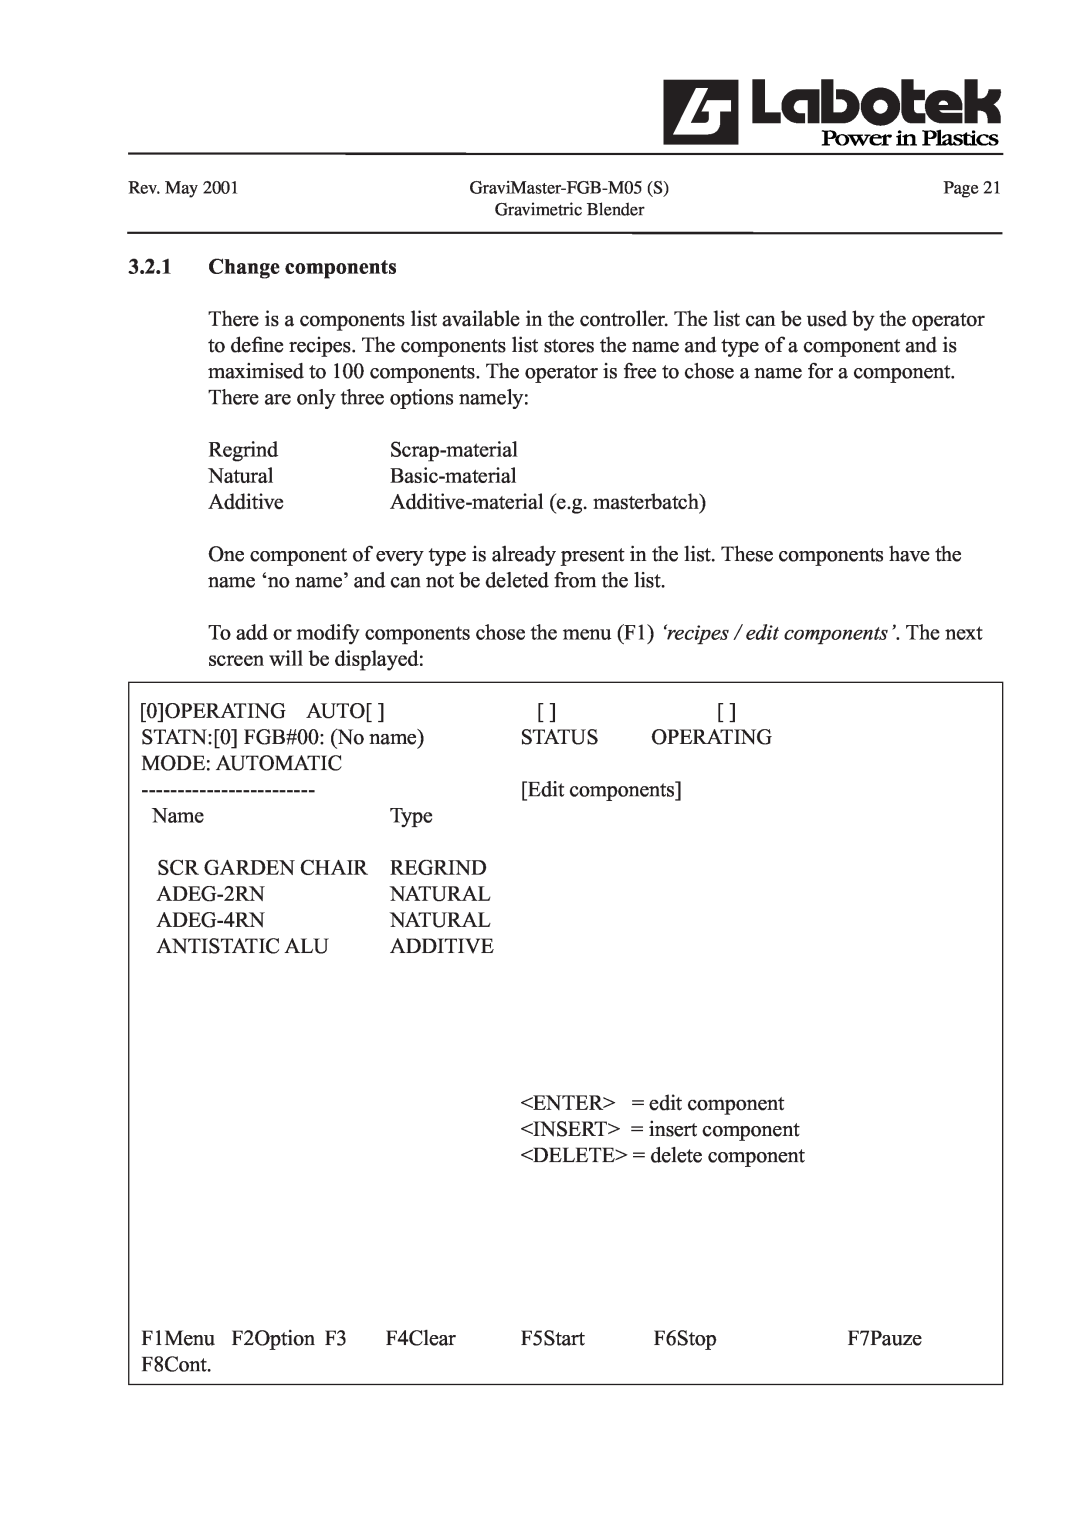 GE FGB-M05 manual 3.2.1Change components 